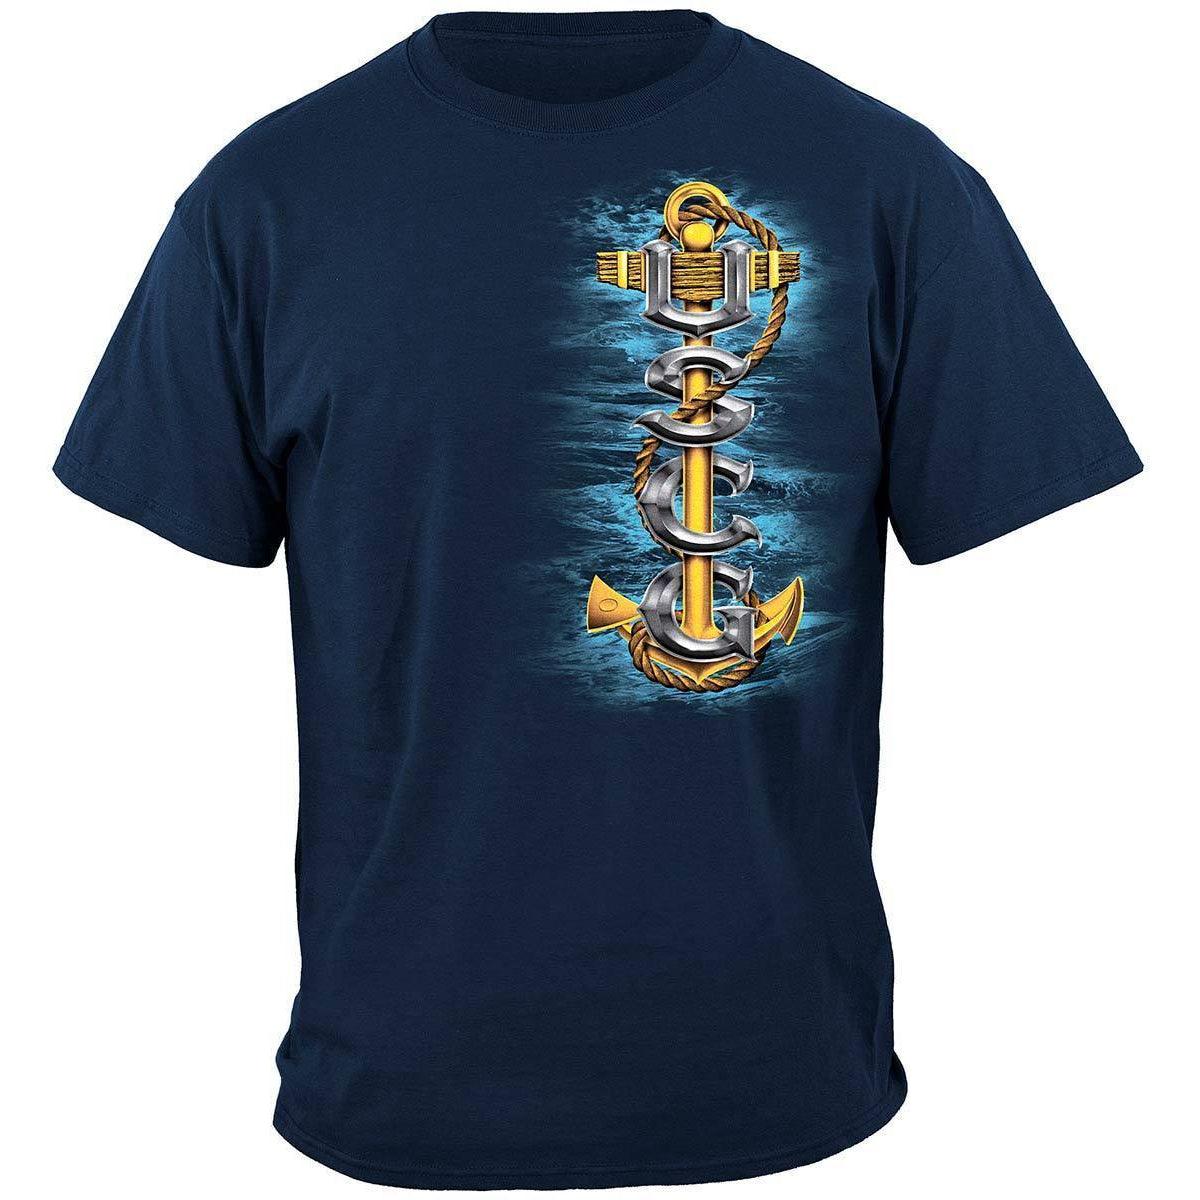 US Coast Guard T-Shirt - Military Republic